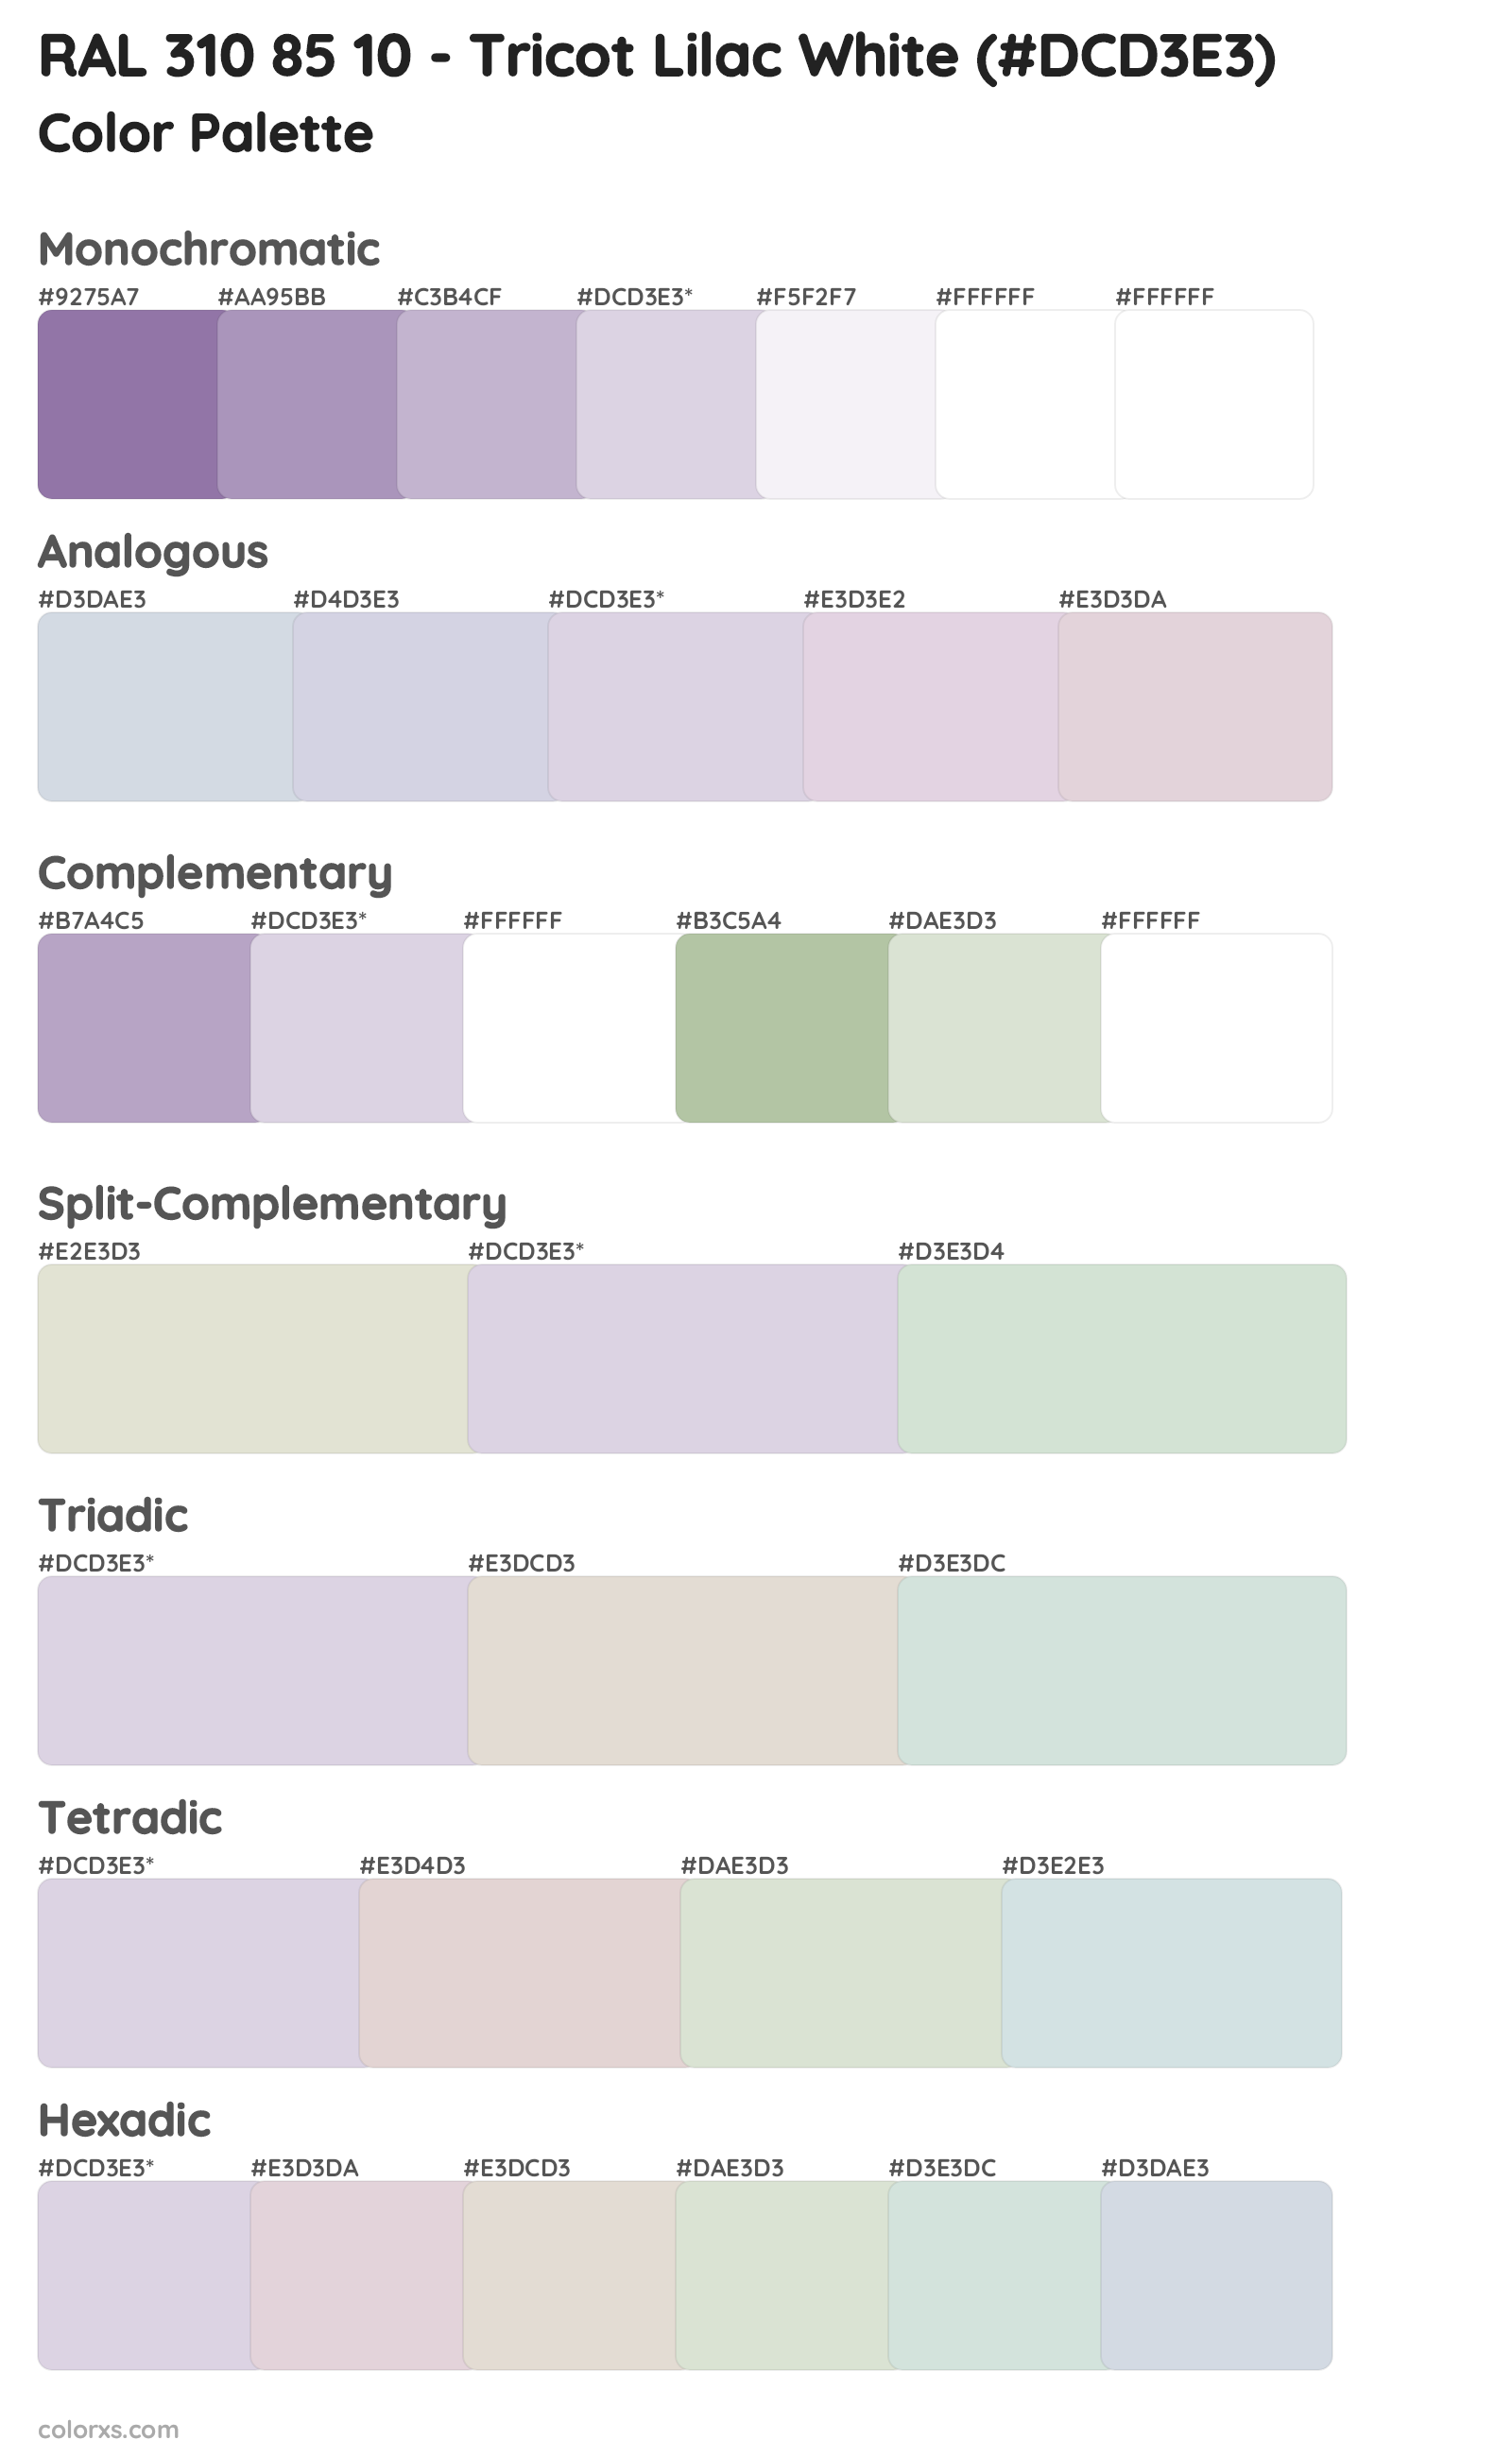 RAL 310 85 10 - Tricot Lilac White Color Scheme Palettes